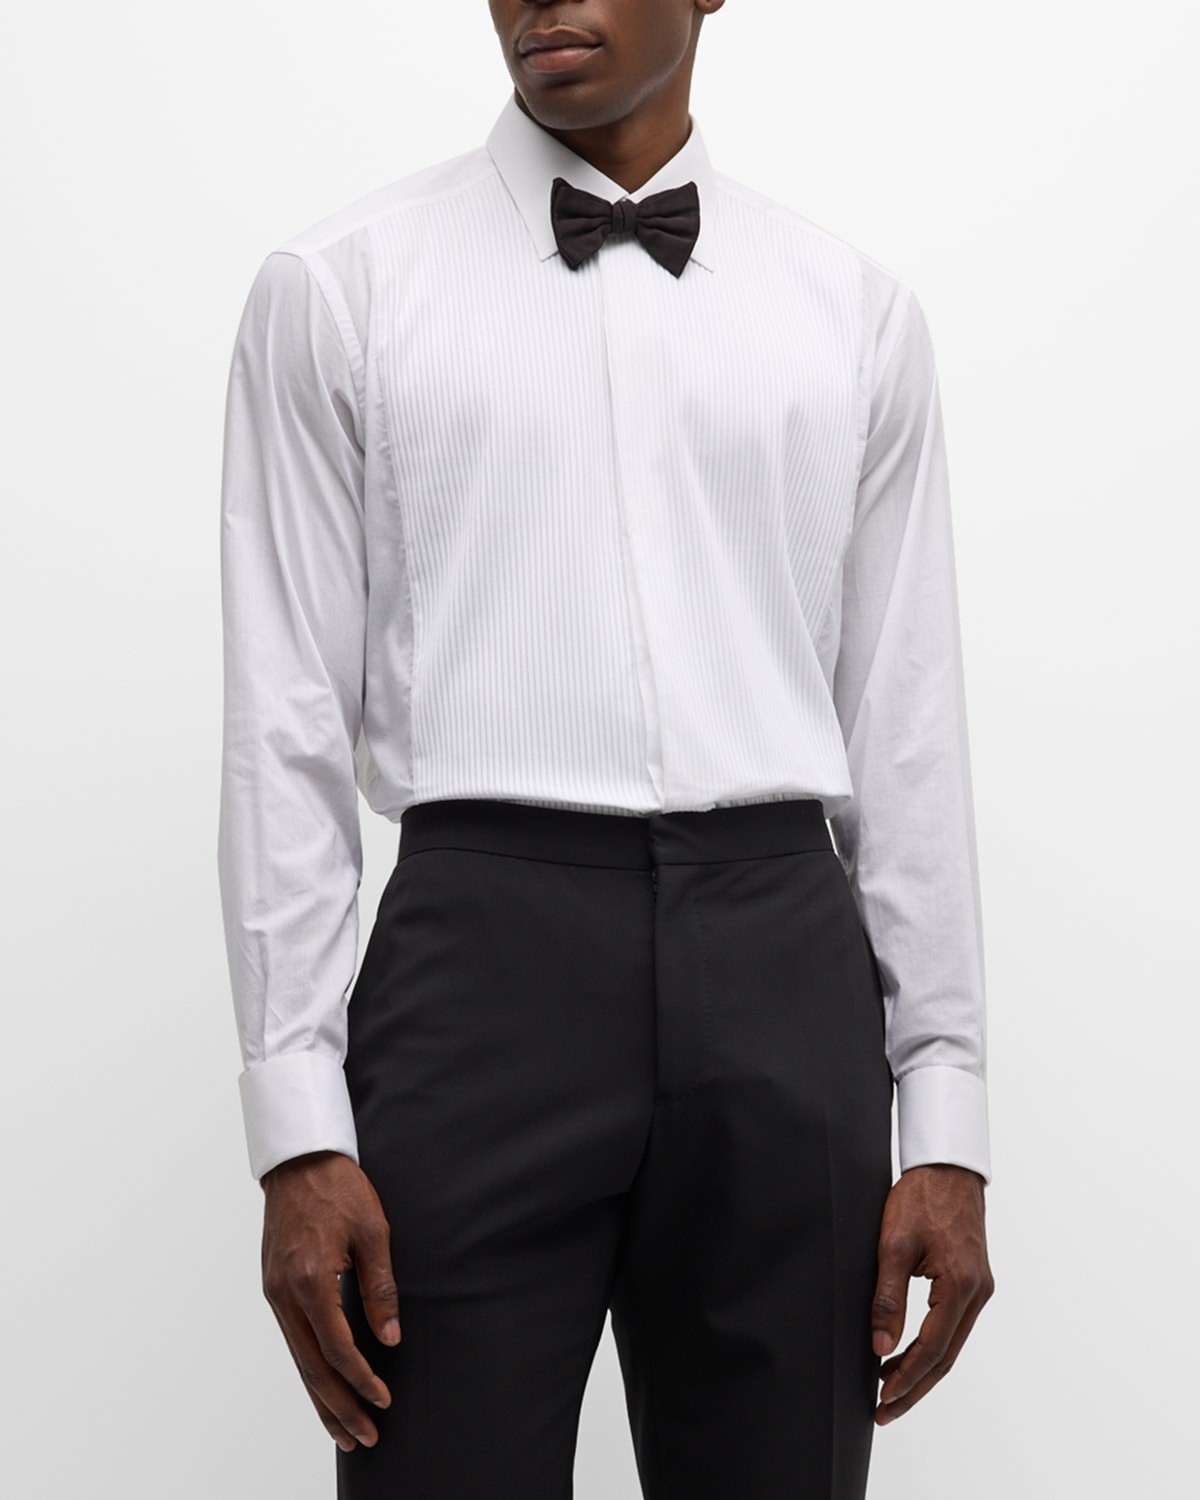 Brioni Wardrobe Essential Solid Dress Shirt, White | Neiman Marcus